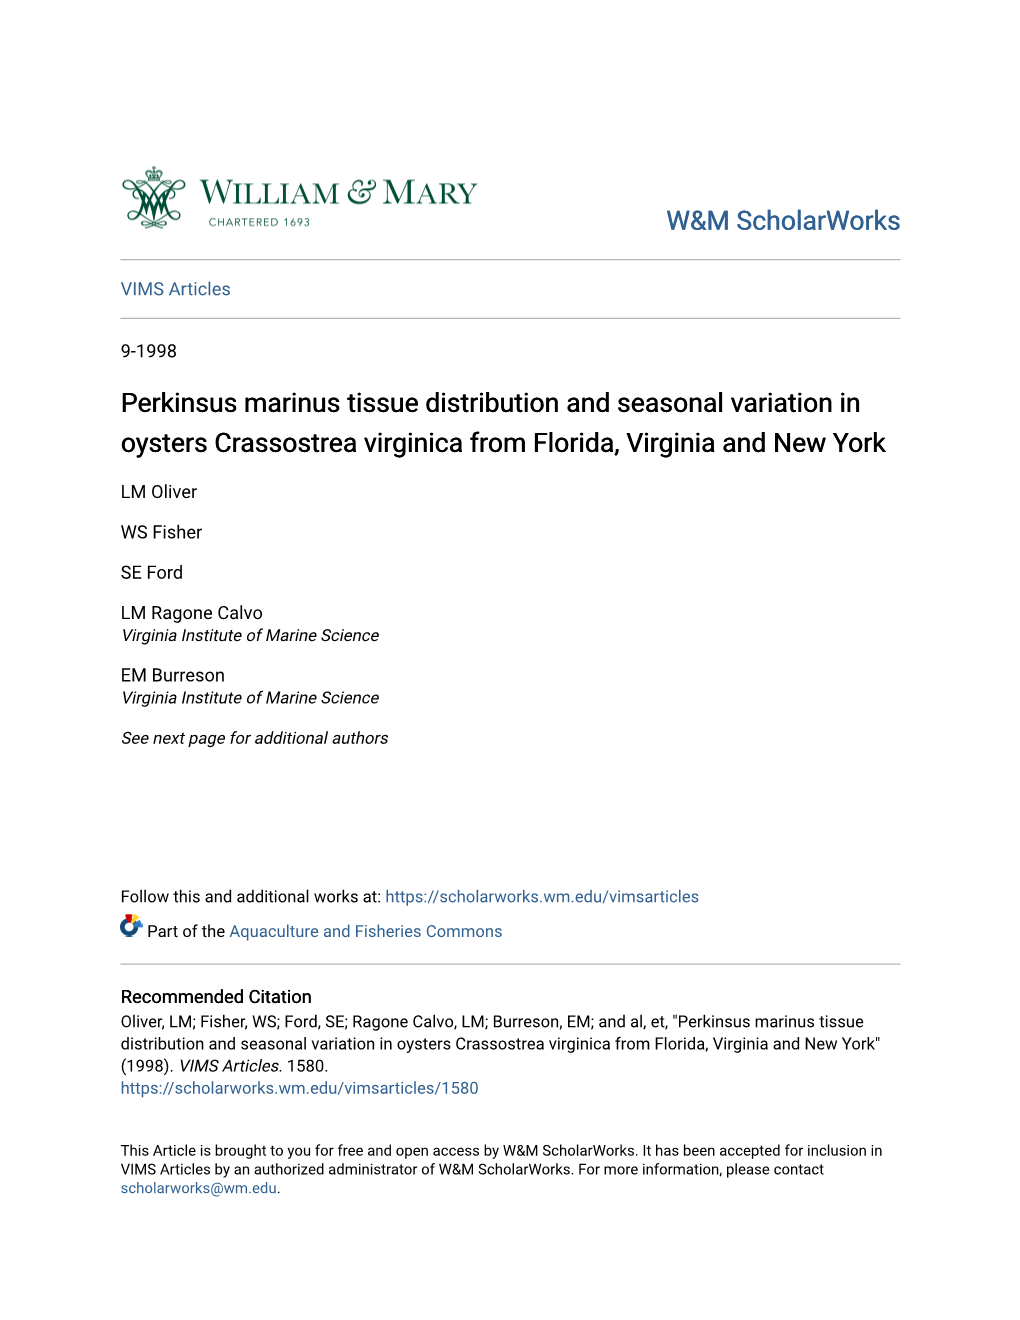 Perkinsus Marinus Tissue Distribution and Seasonal Variation in Oysters Crassostrea Virginica from Florida, Virginia and New York